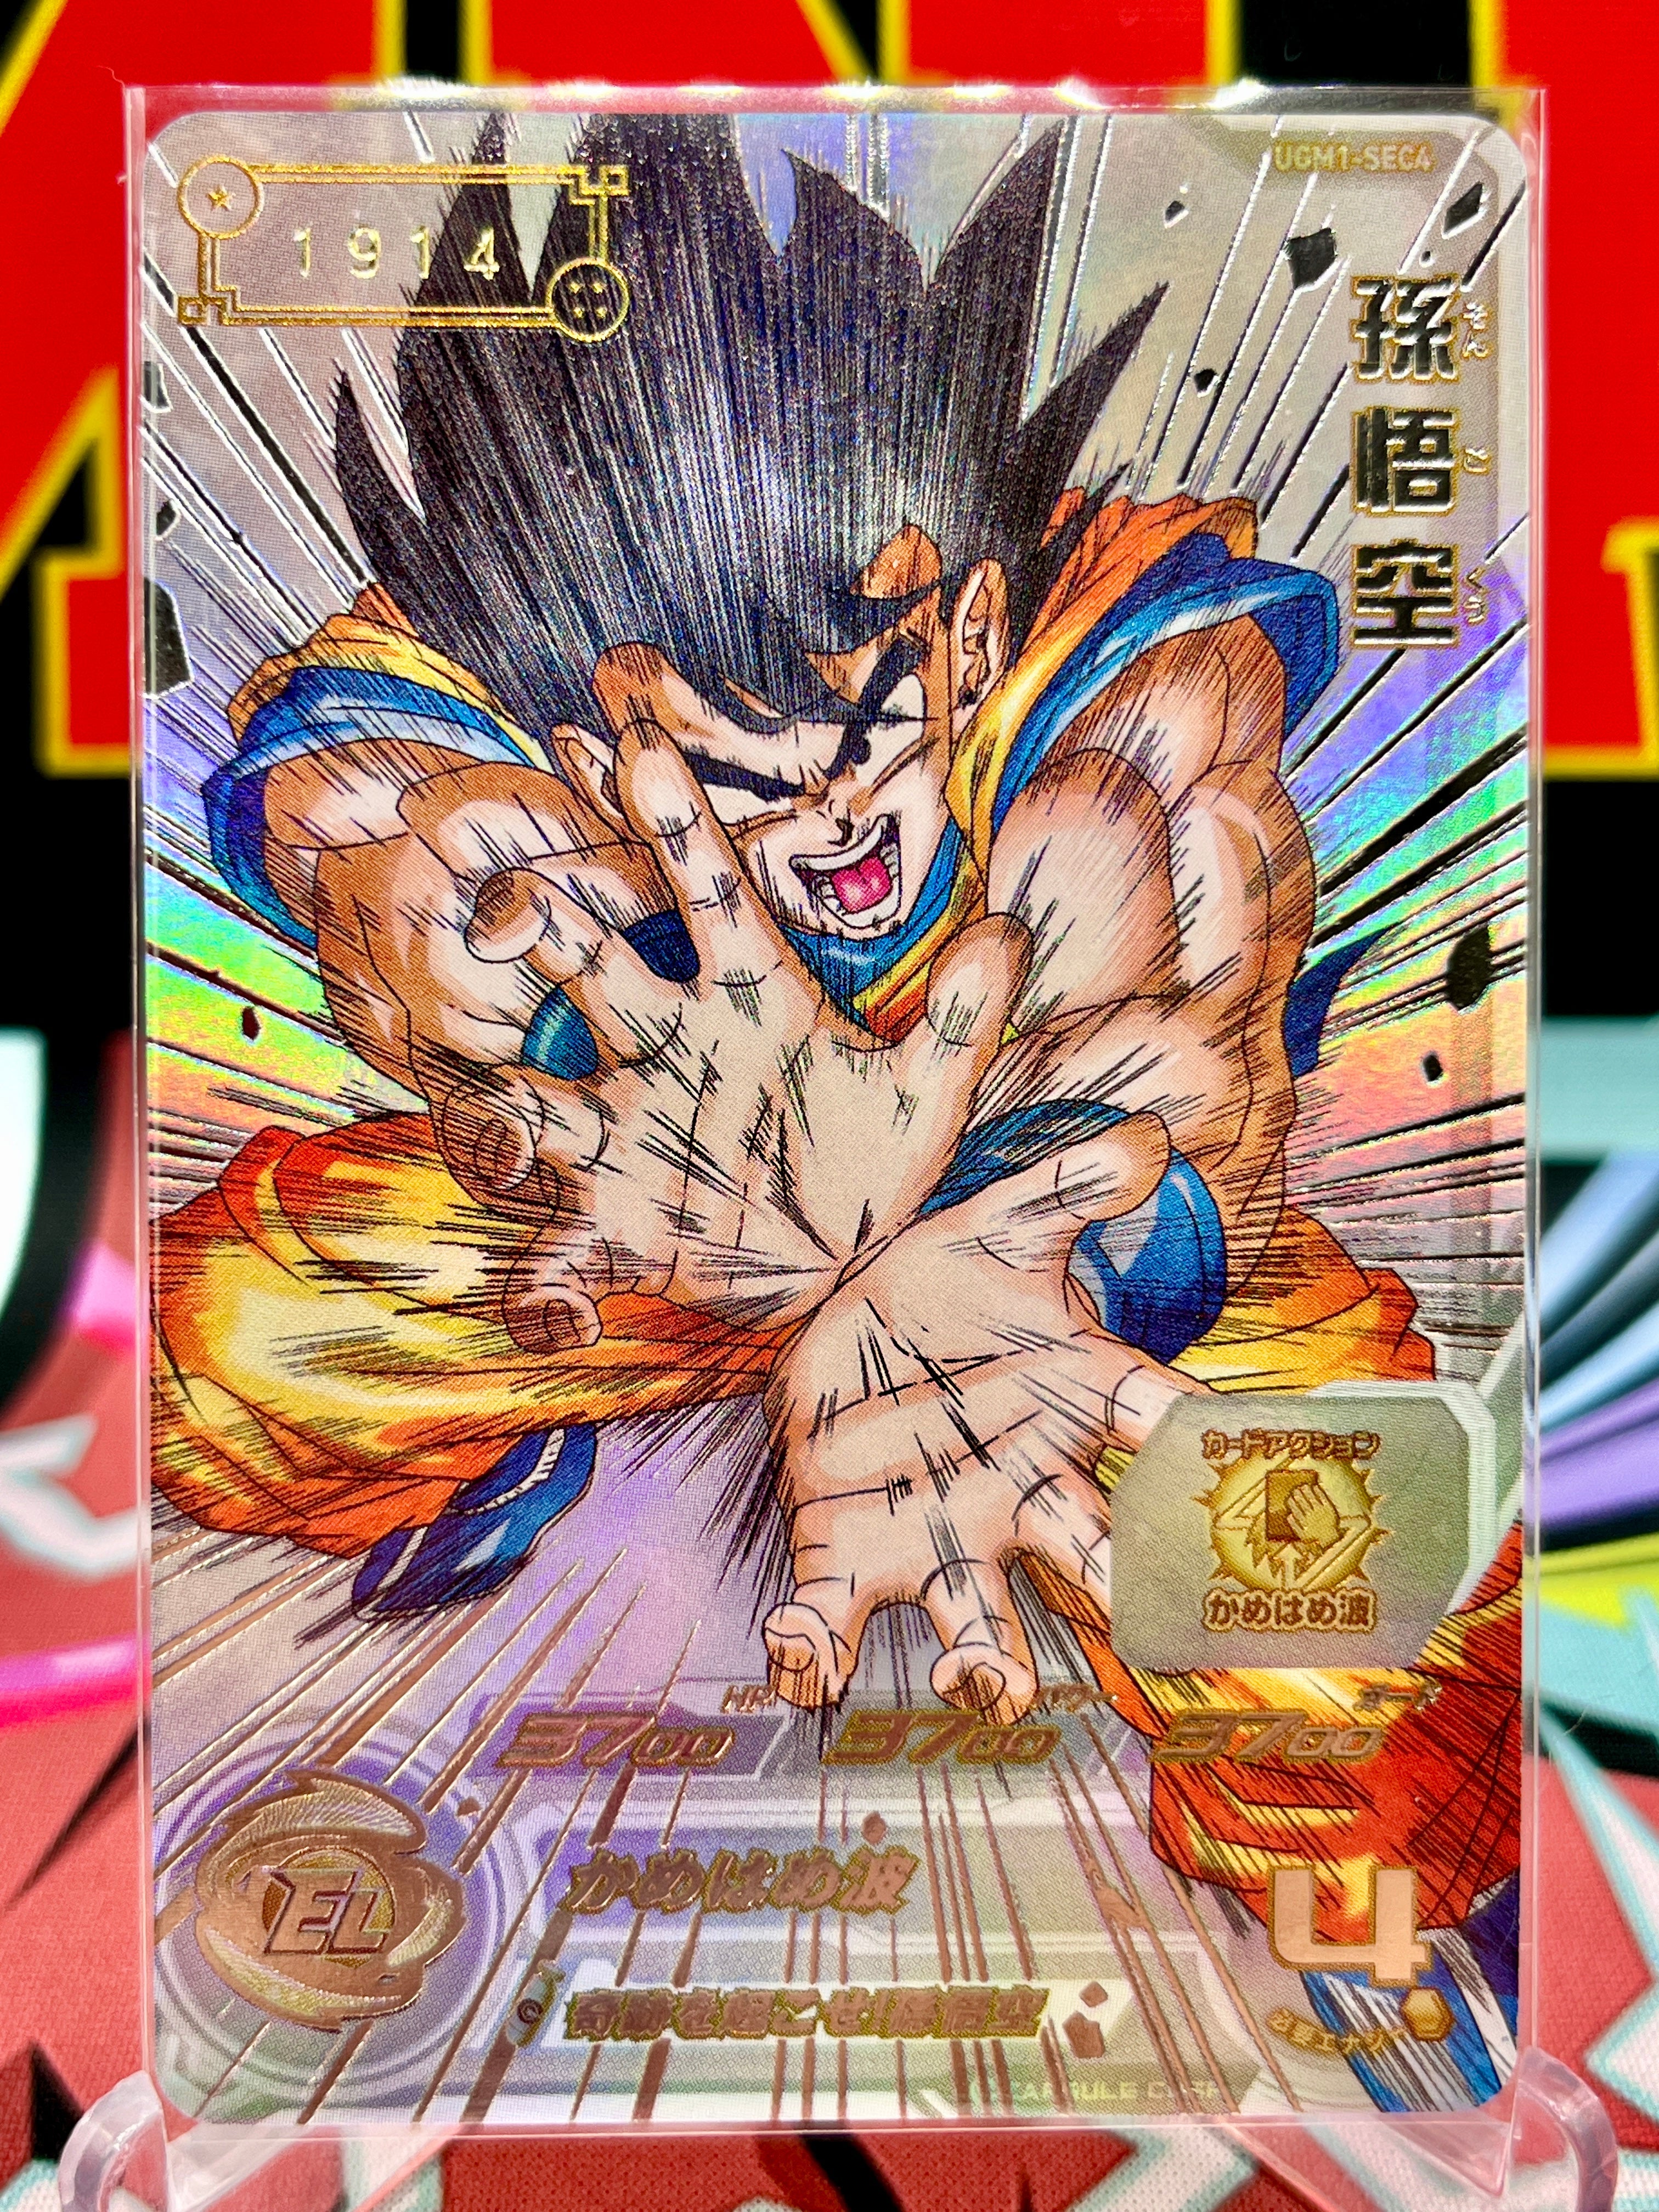 UGM1-SEC4 [#1914 of 5900] Son Goku (2022)